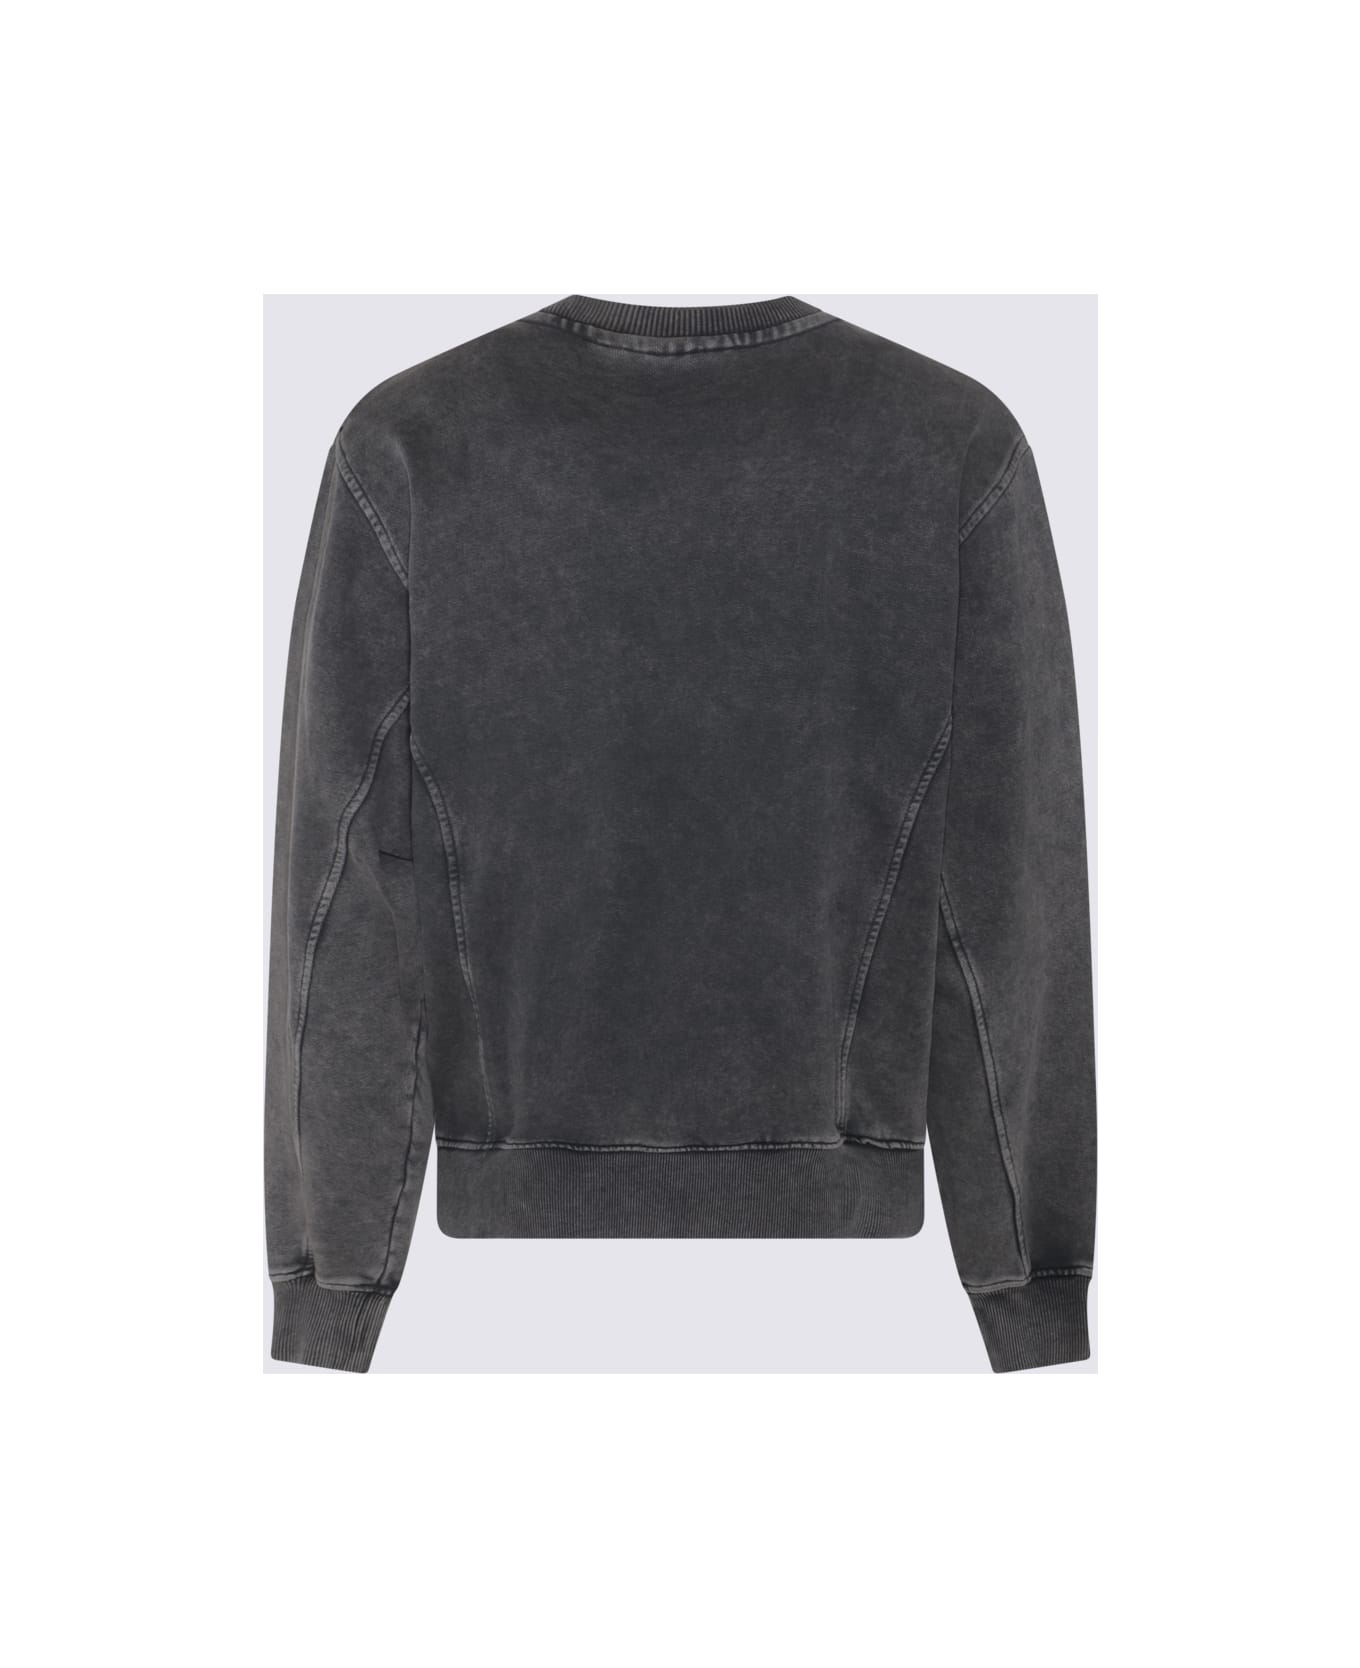 Daily Paper Grey Cotton Sweatshirt - grey flannel